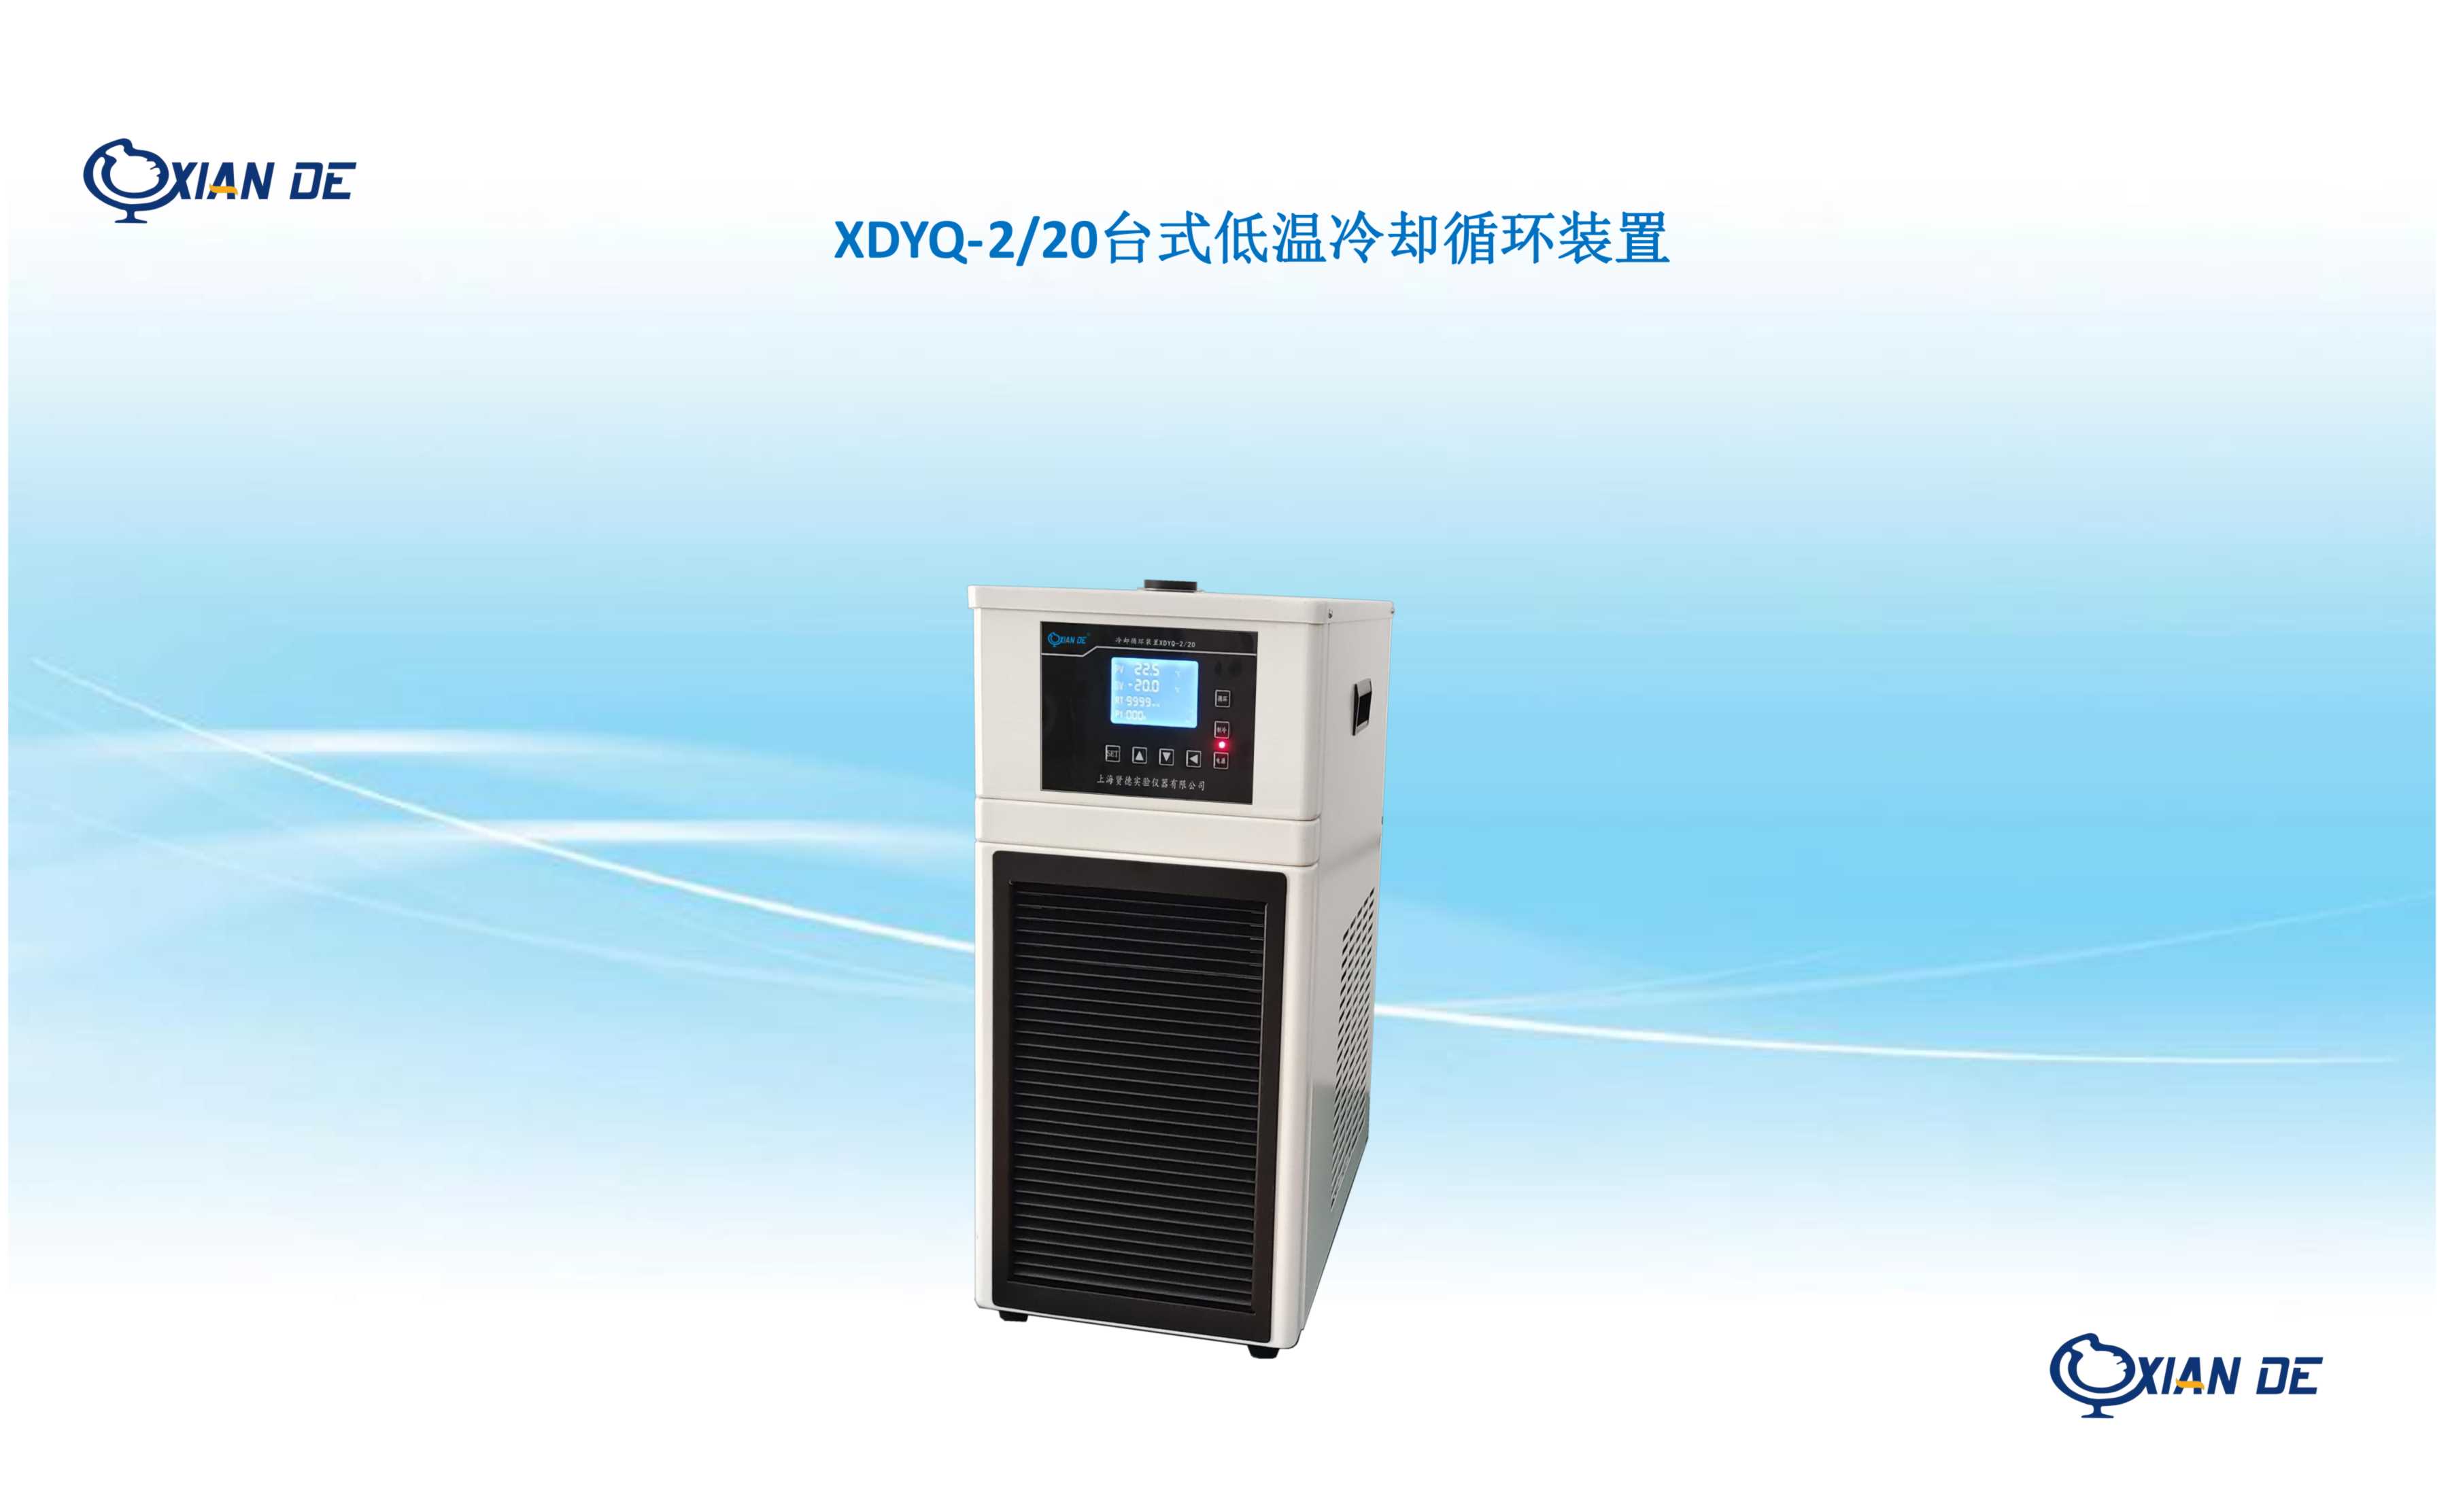 XDYQ-2-20台式低温.jpg